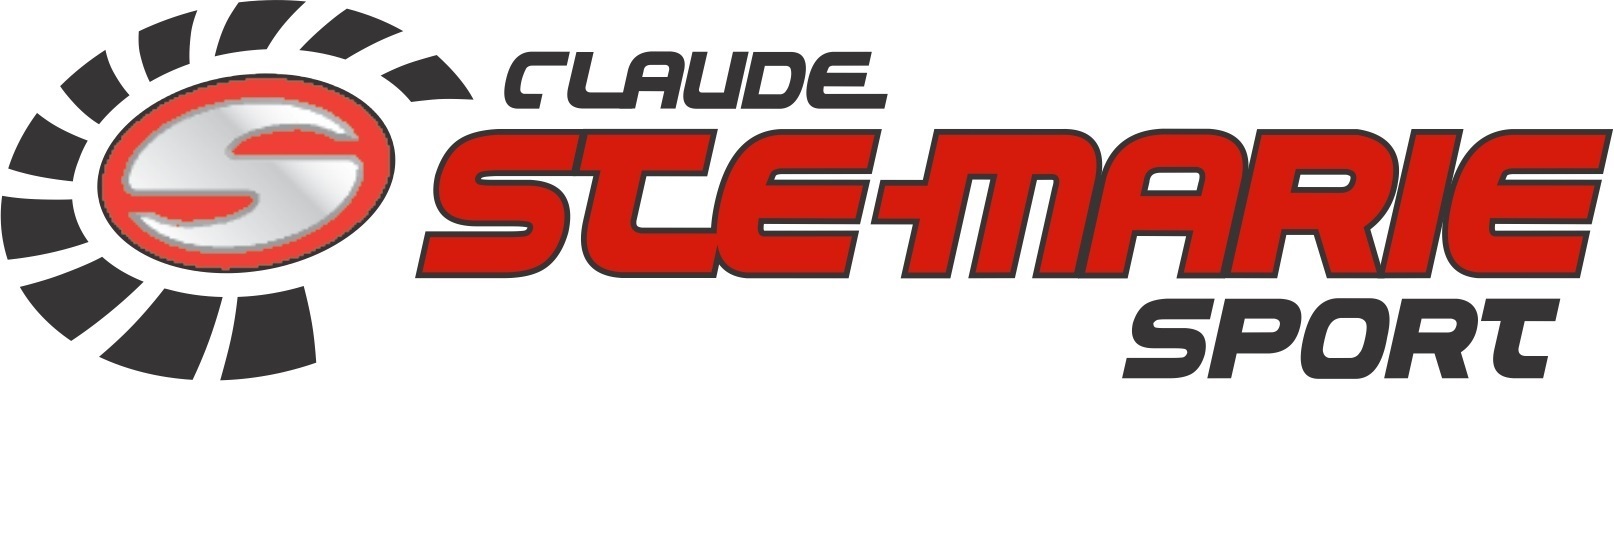 logo Claude Sainte-Marie Sport